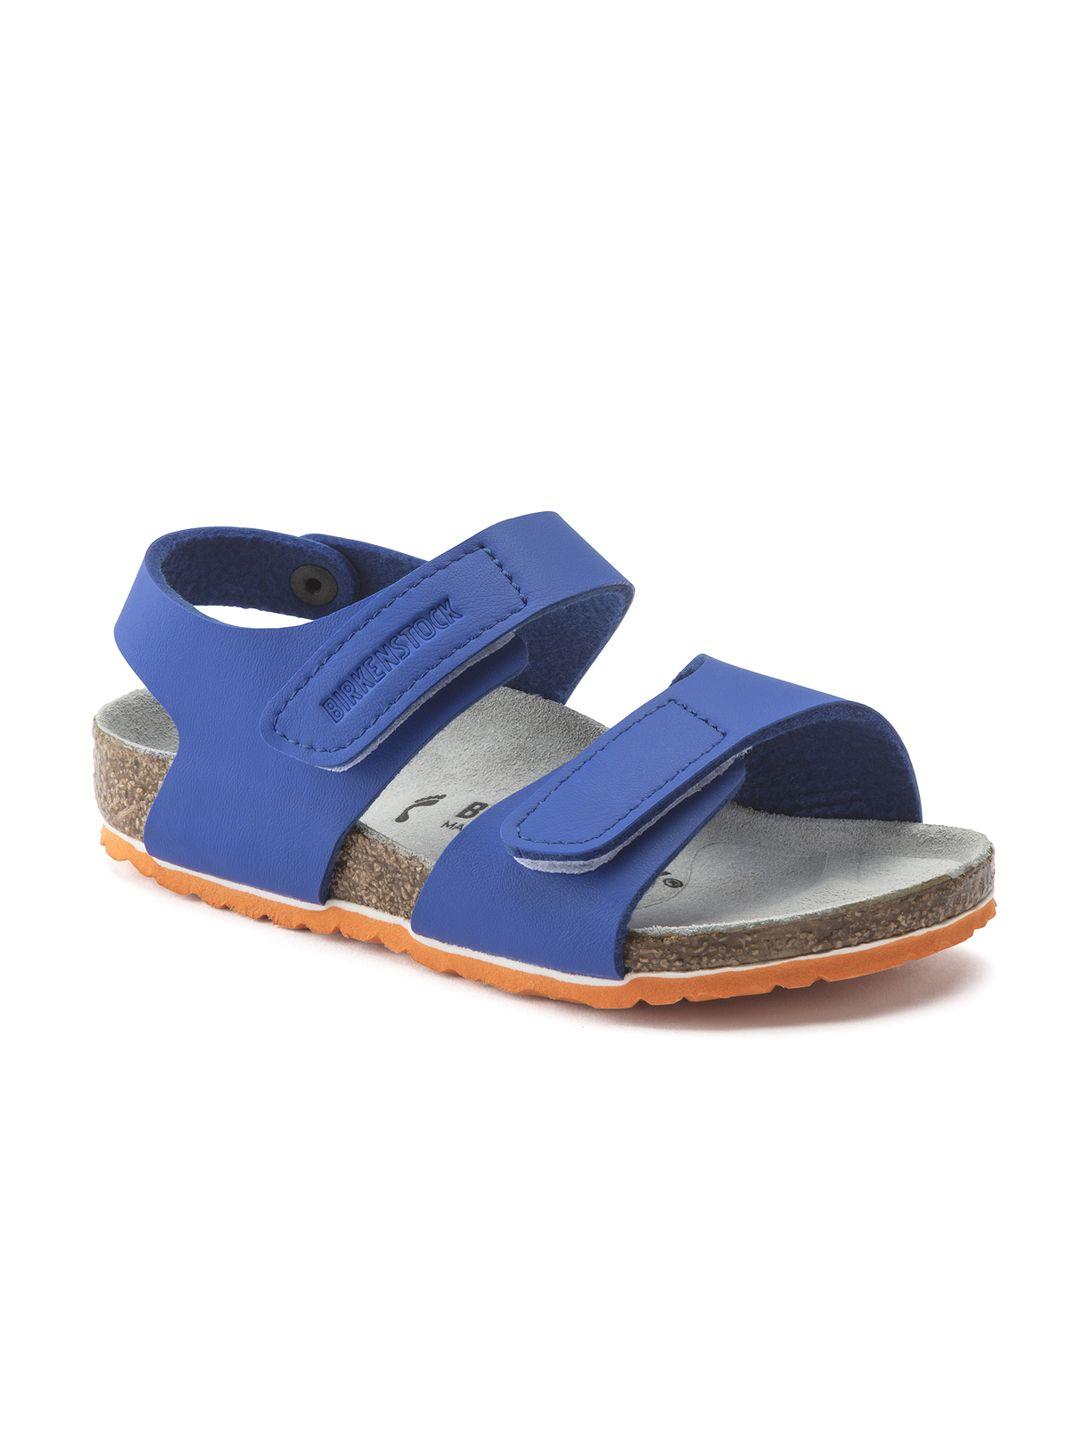 birkenstock boys narrow width blue palu comfort sandals